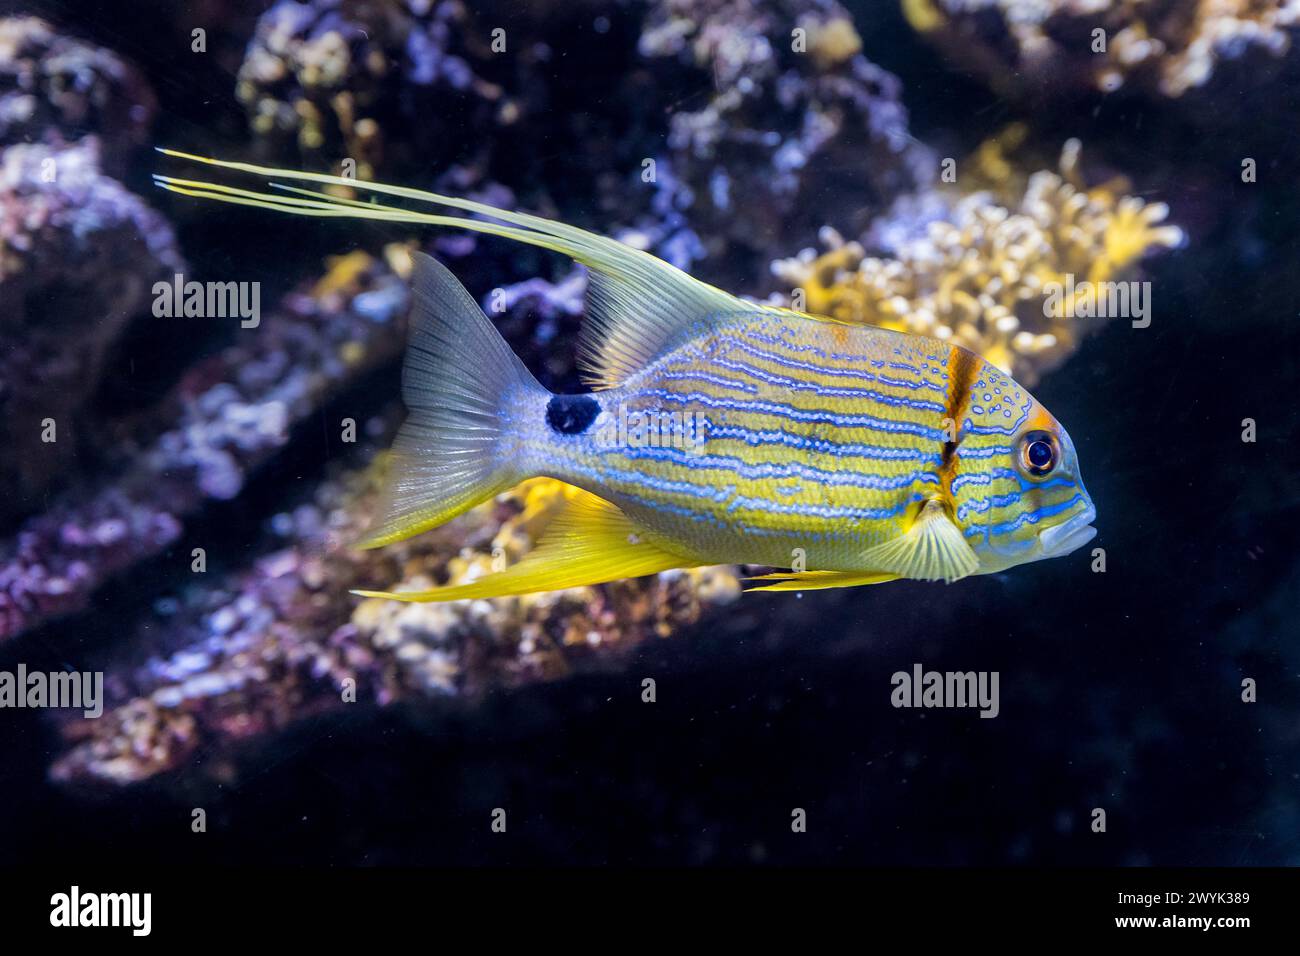 Spain, Catalonia, Barcelona, Port Vell, the aquarium, sailfin snapper (Symphorichthys spilurus) Stock Photo